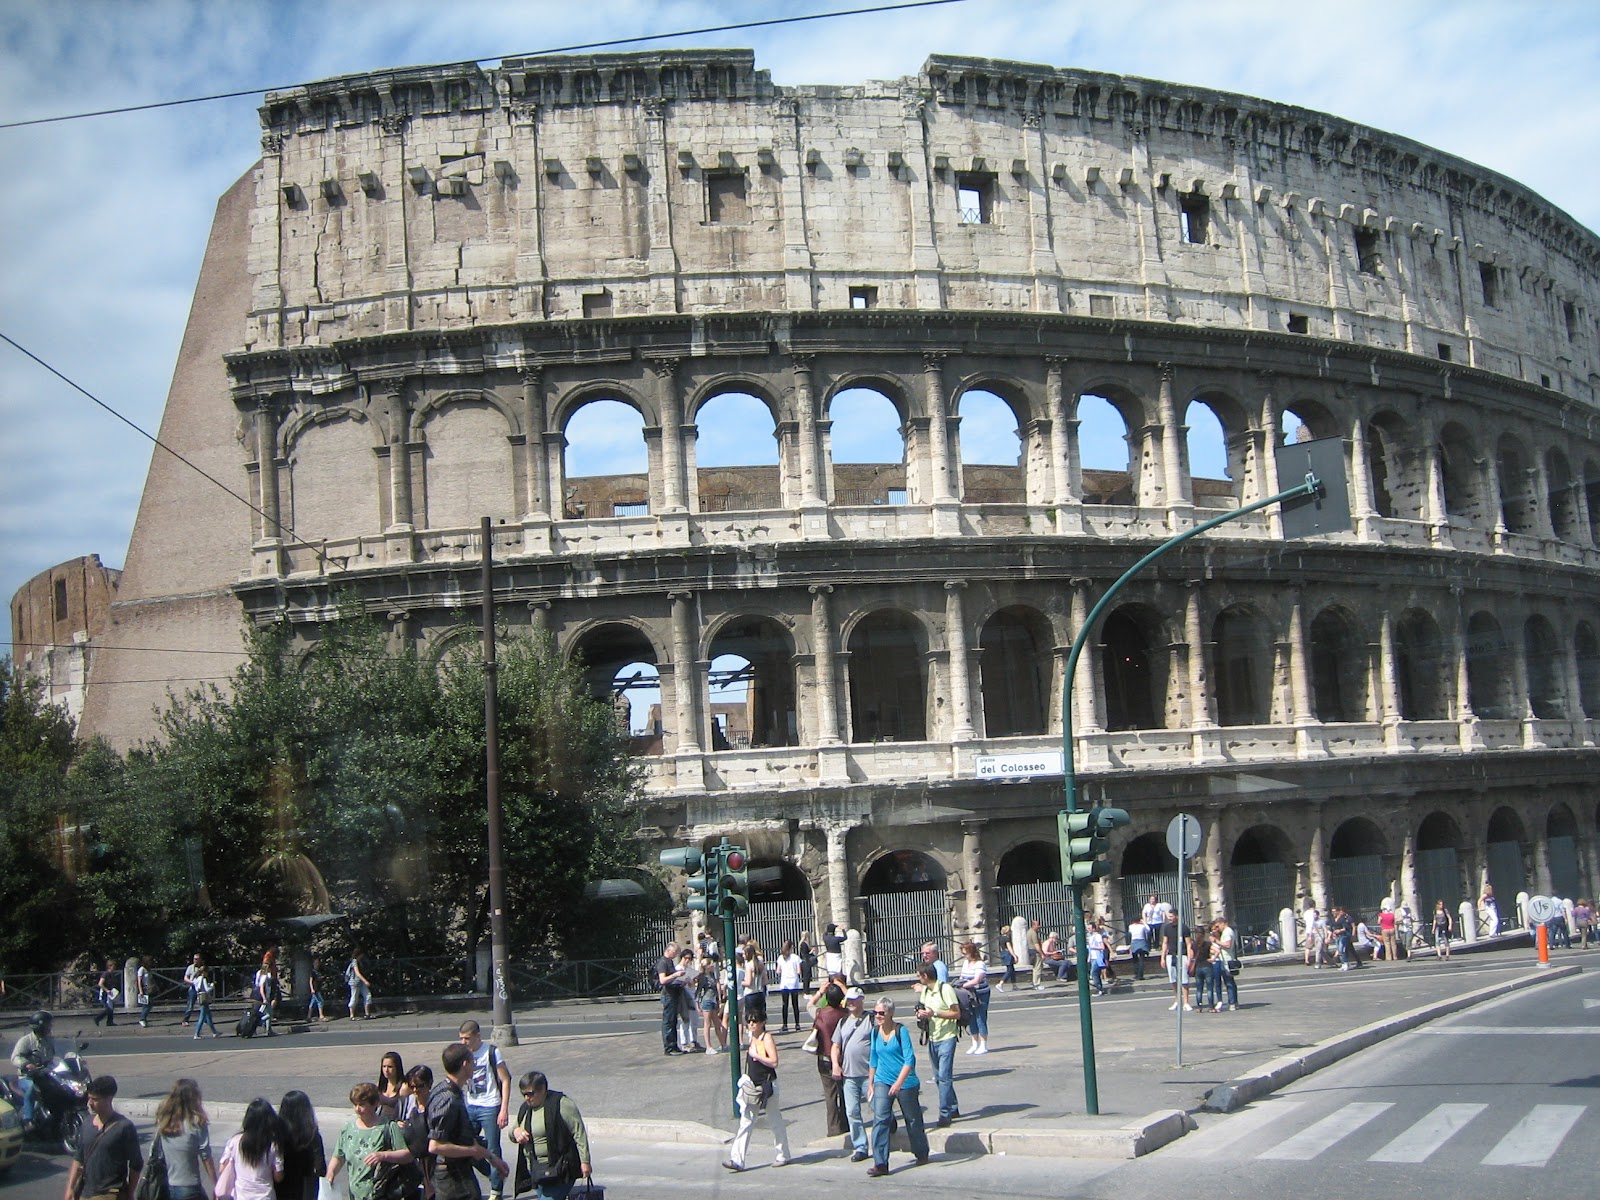 Kurt and Linda: Ancient Rome - Coliseum